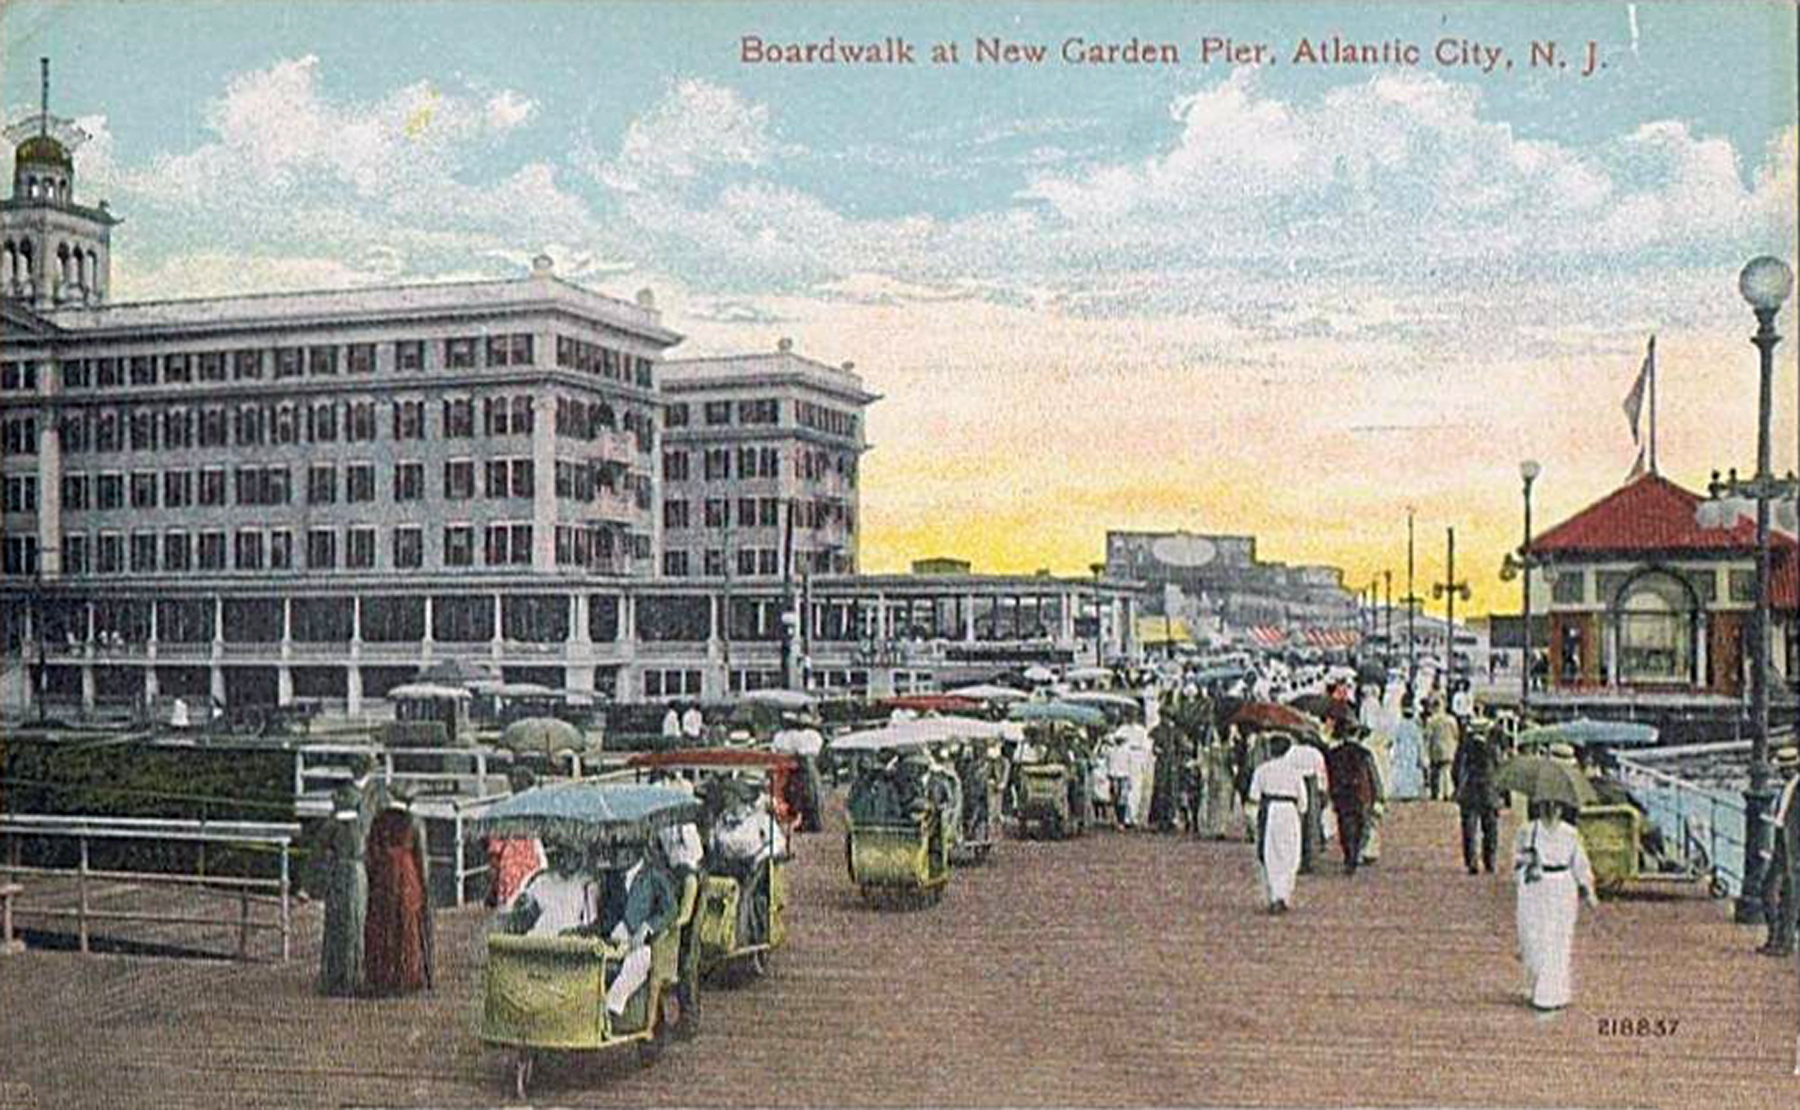 Atlantic City - Boardwalk  At New Garden Pier - c 1910s